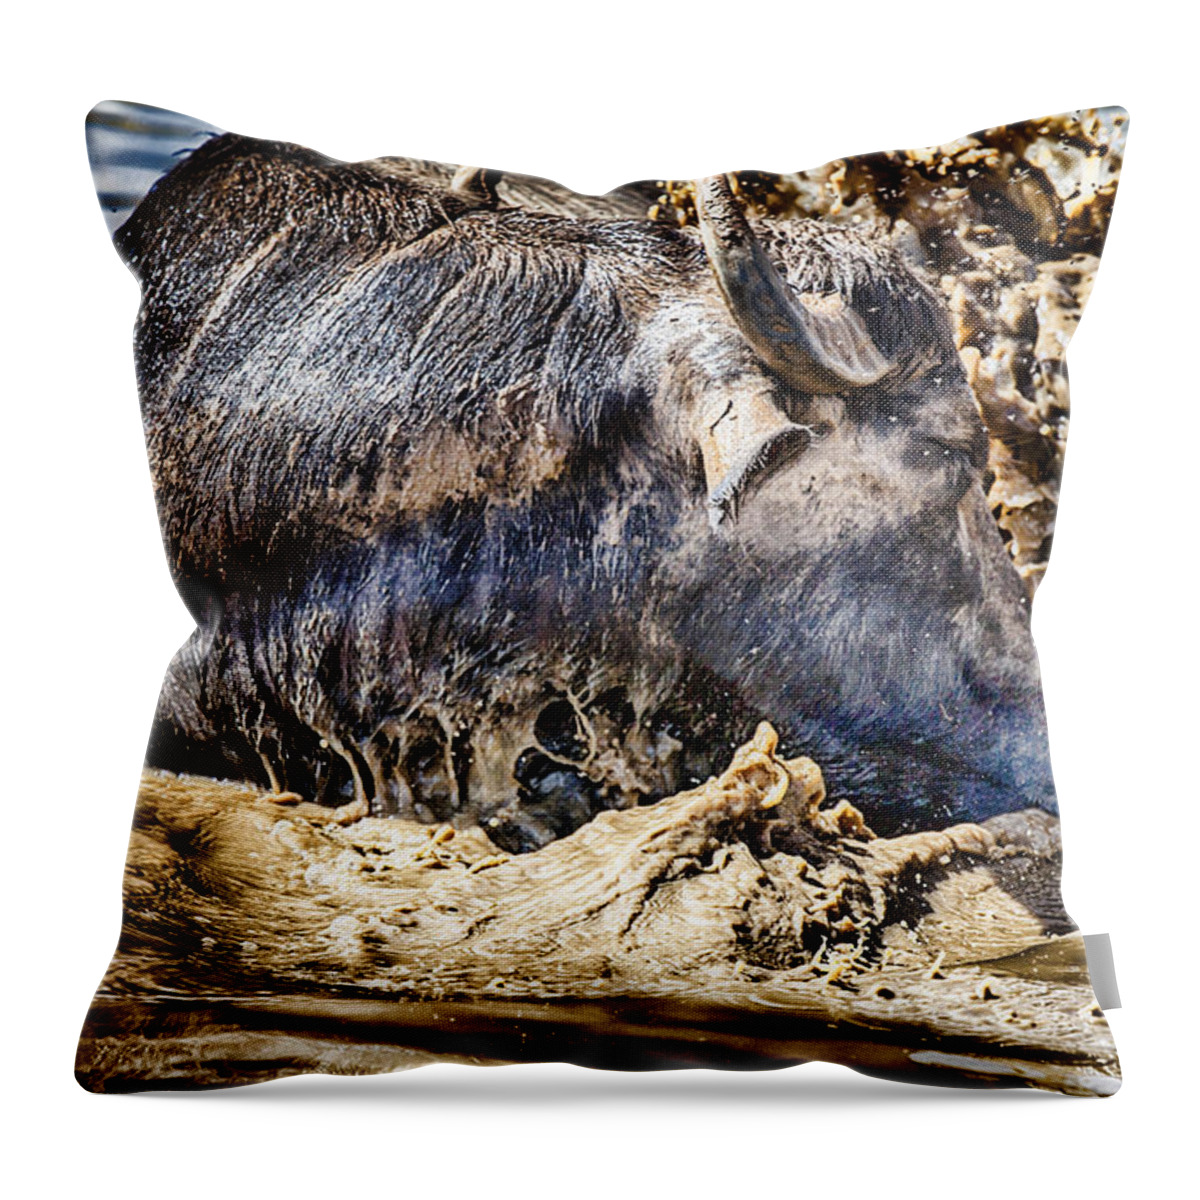 Water Buffalo Throw Pillow featuring the photograph Temper Tantrum by Douglas Barnard